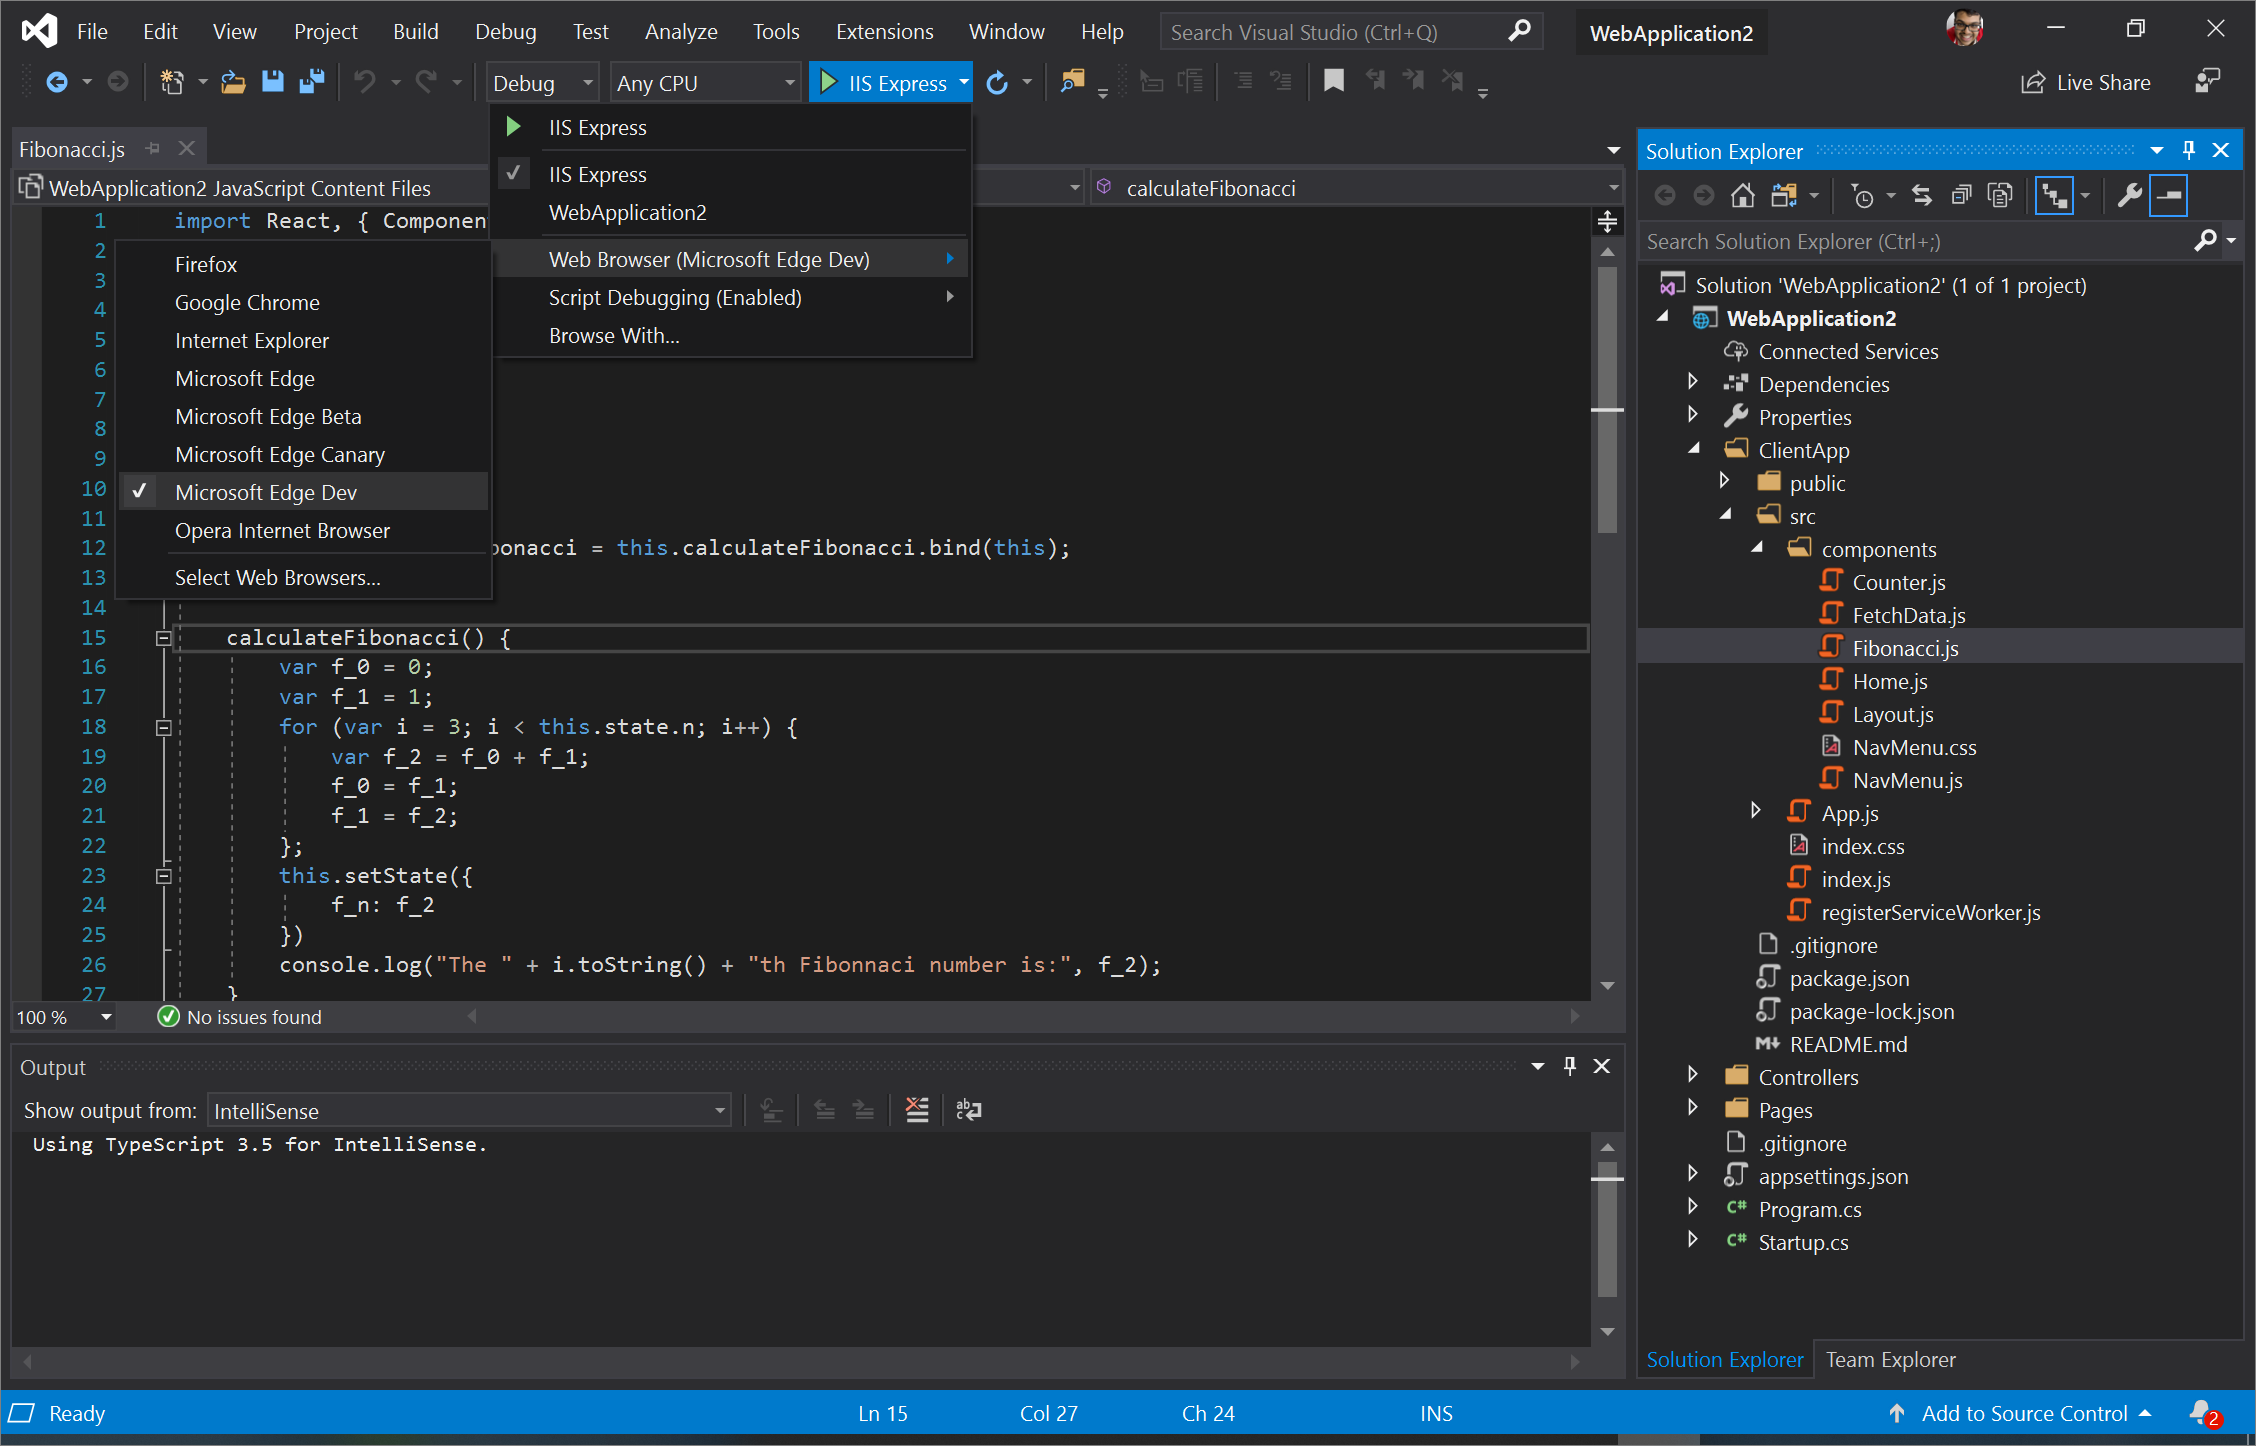 Screenshot of Visual Studio, selecting the Microsoft Edge Dev browser to launch